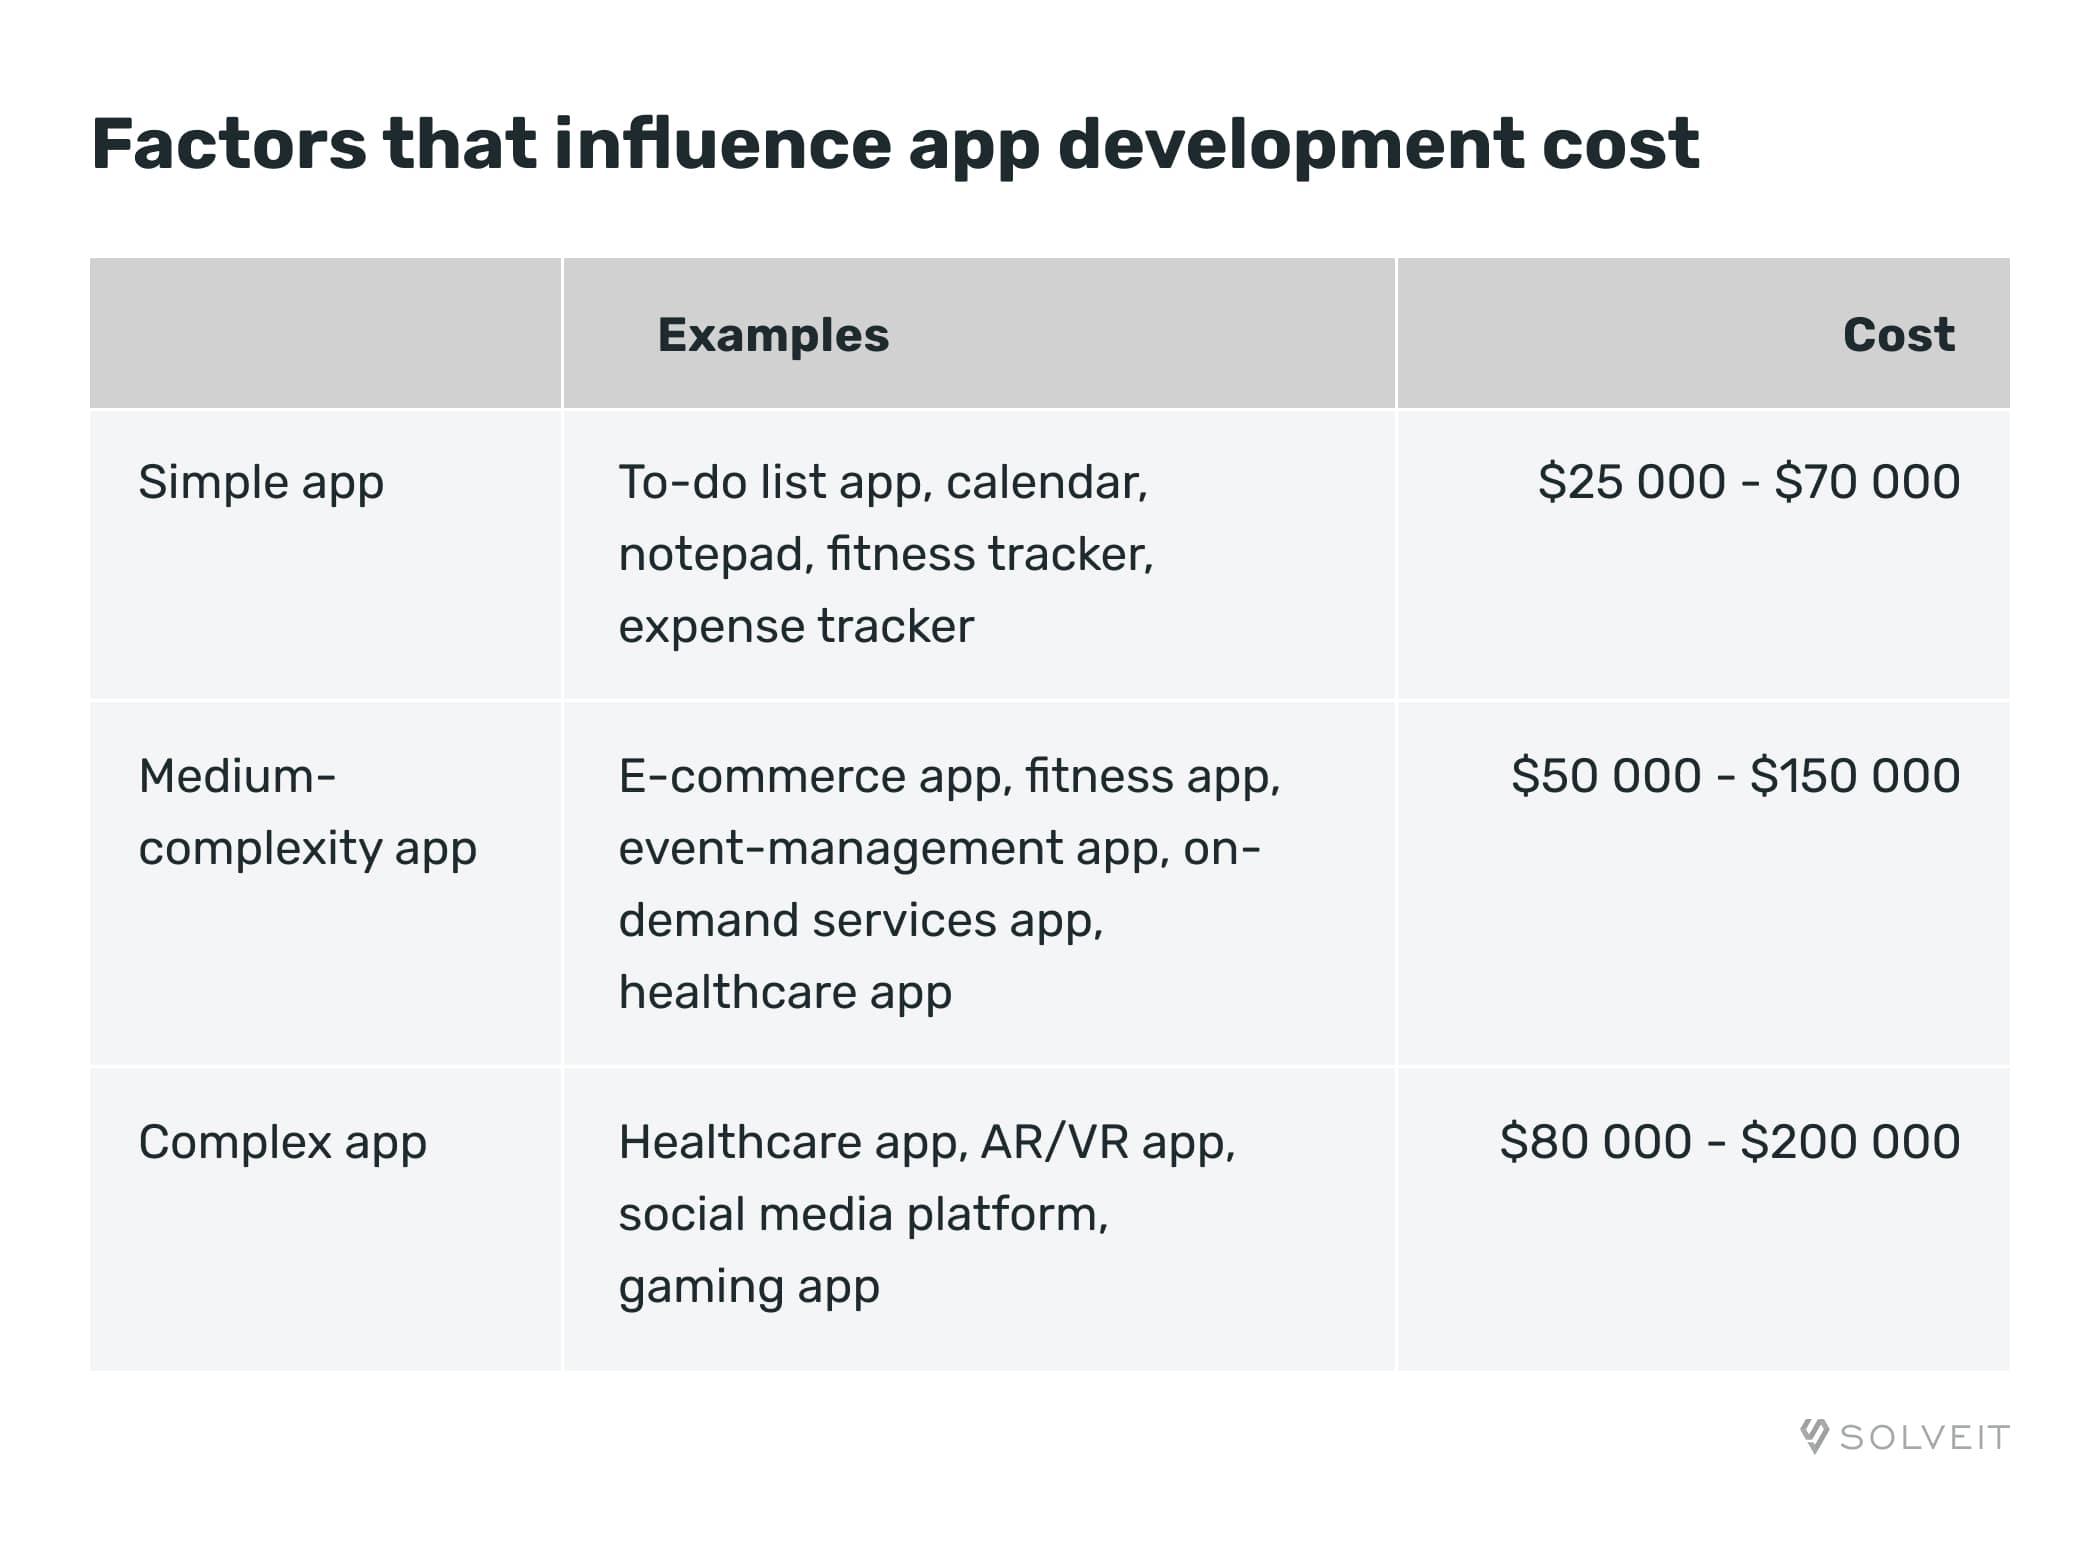 Factors that influence mobile app development cost